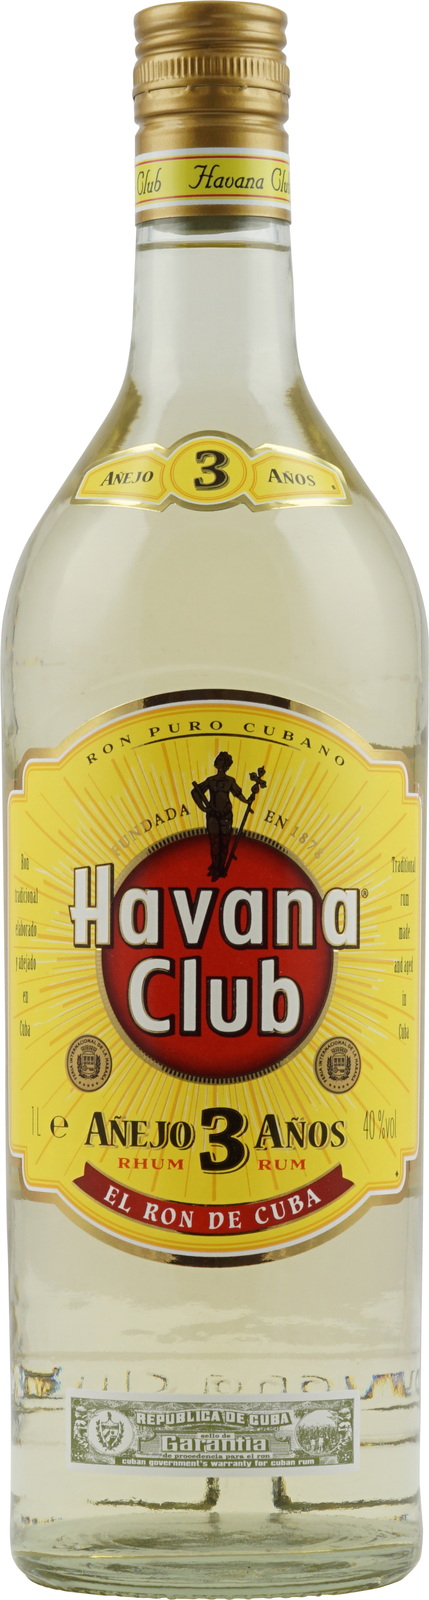 Havana Club Añejo Rum (3 i Vol. Jahre) 40% 1 Liter hier